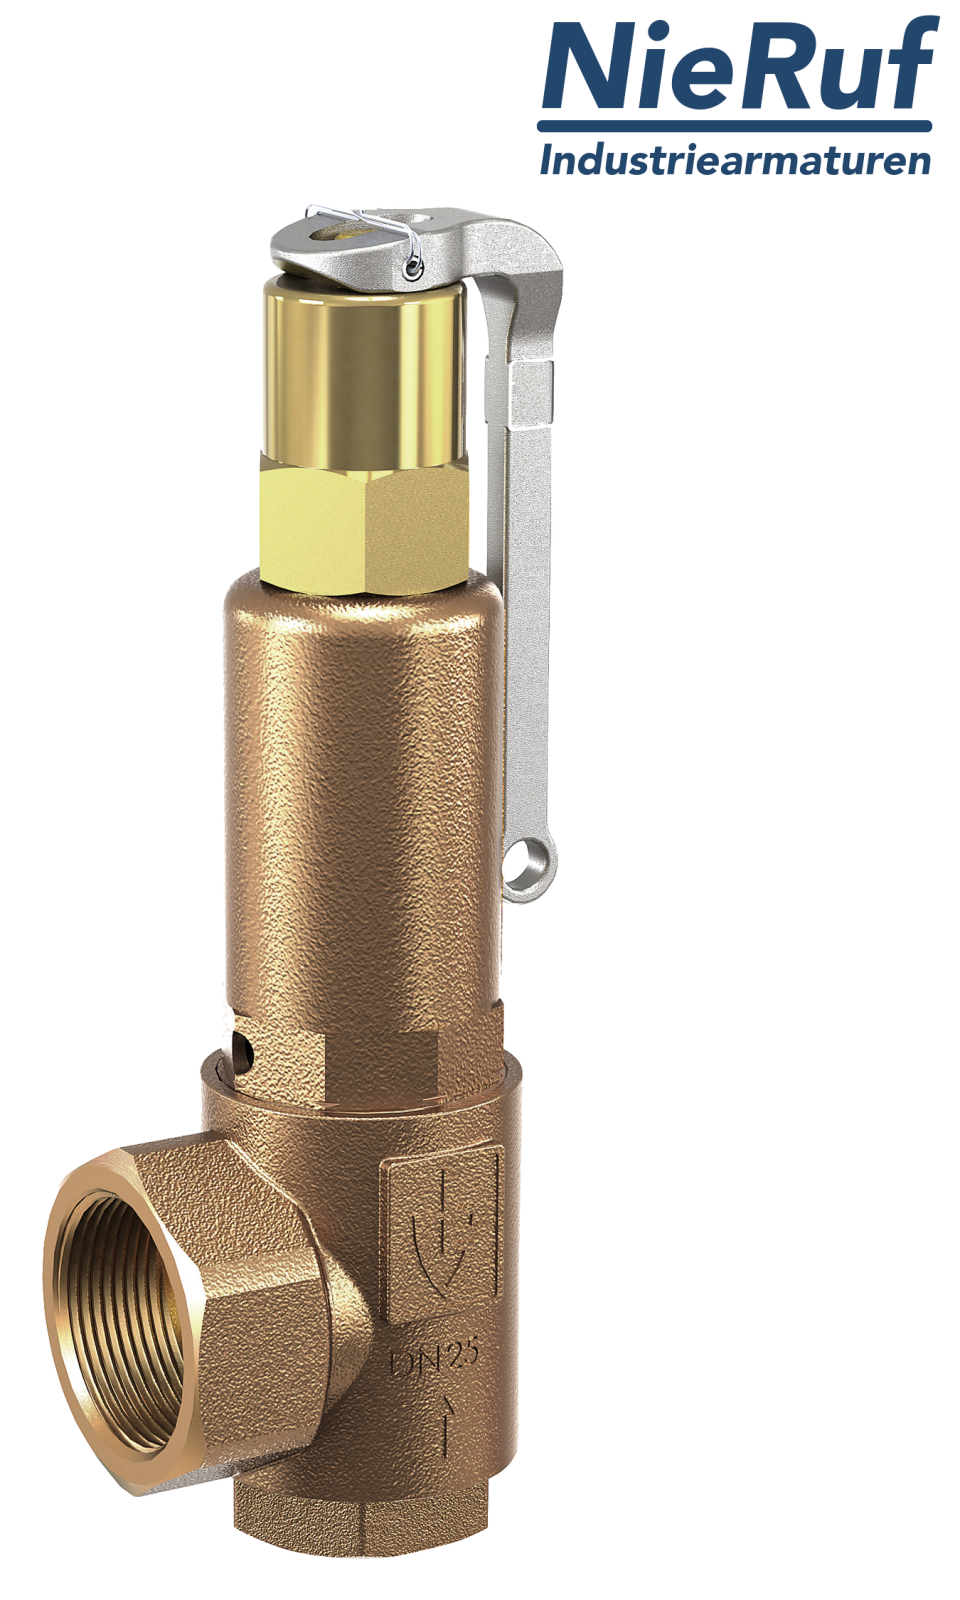 safety valve 2" x 2" fm SV07 neutral gaseous media, gunmetal PTFE, with lever